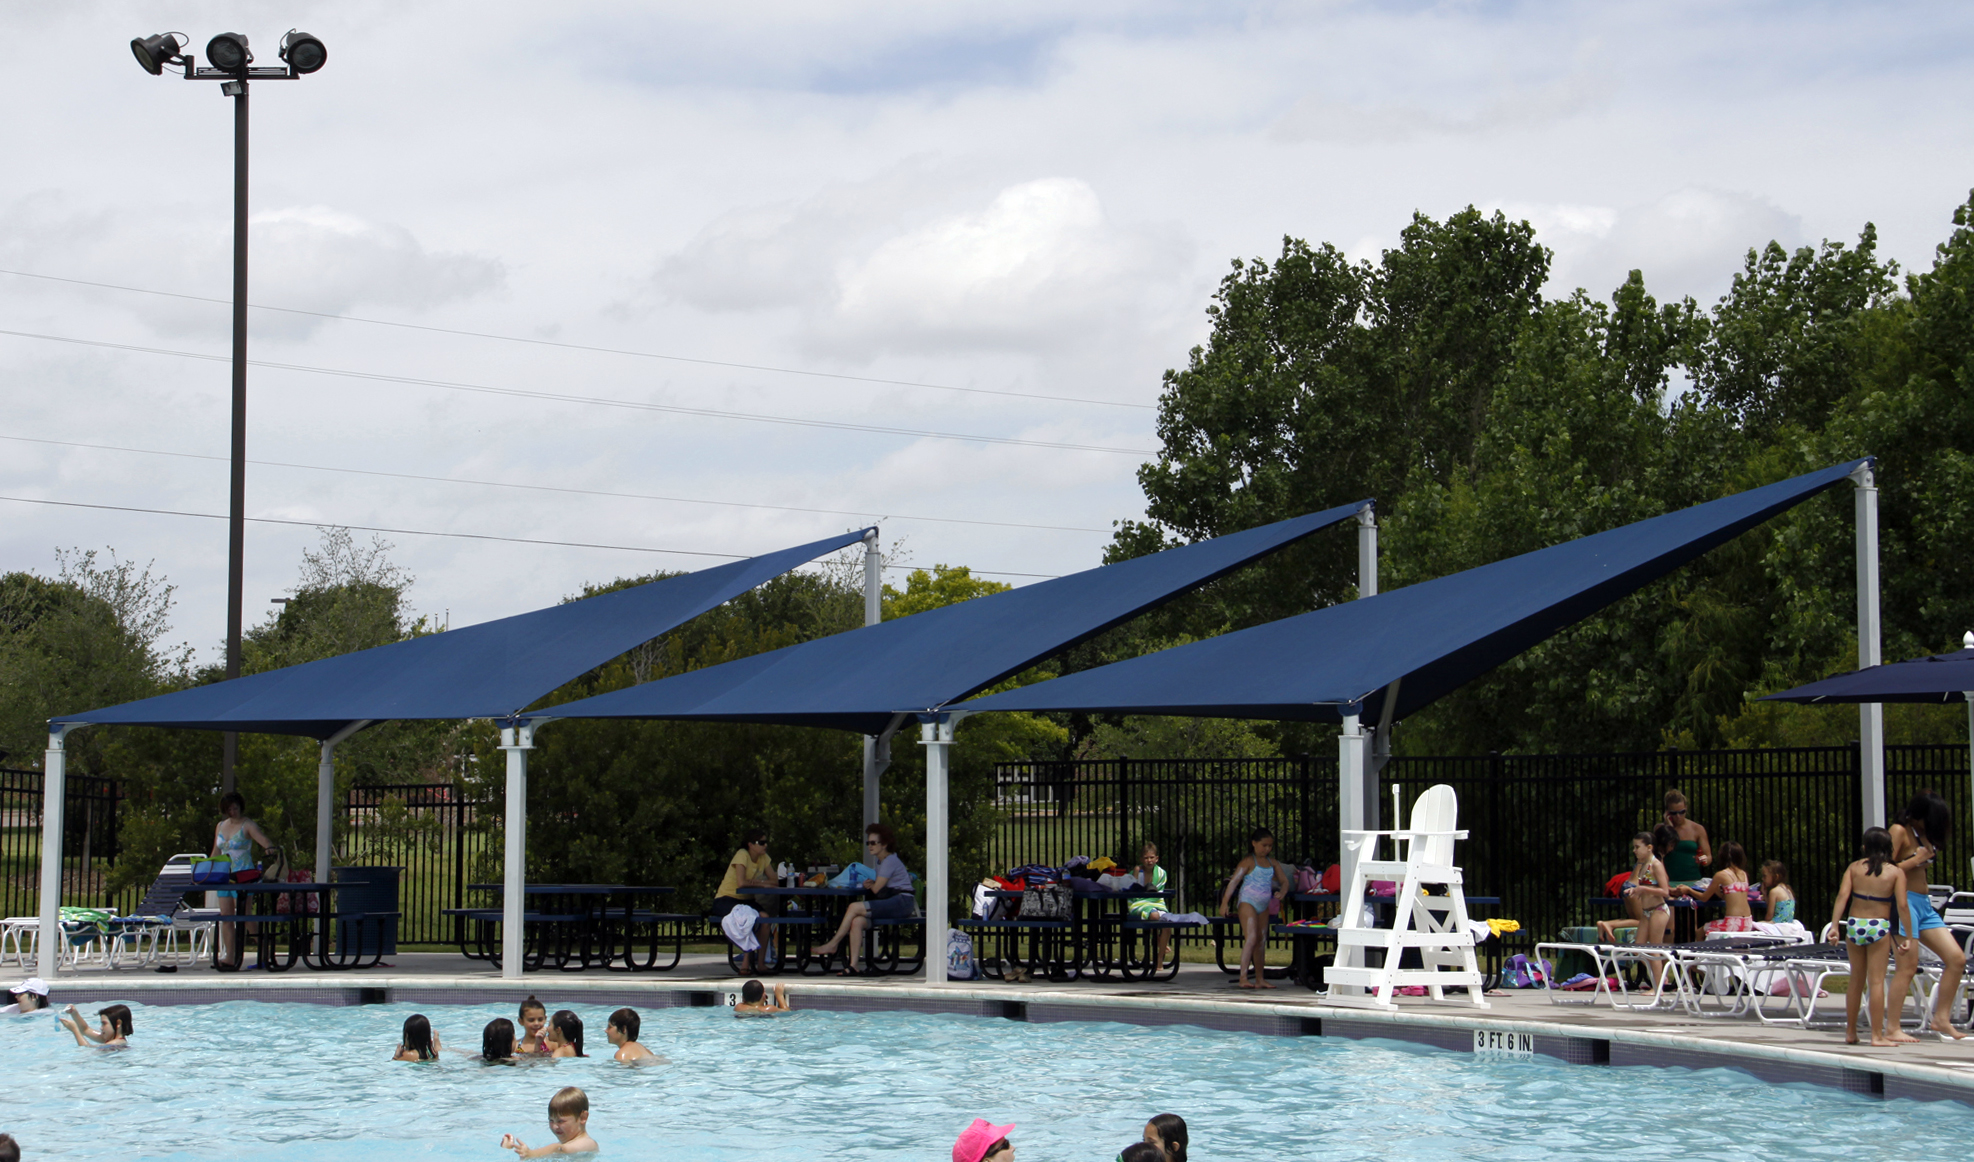 usa shades covering outdoor picnic tables at pool